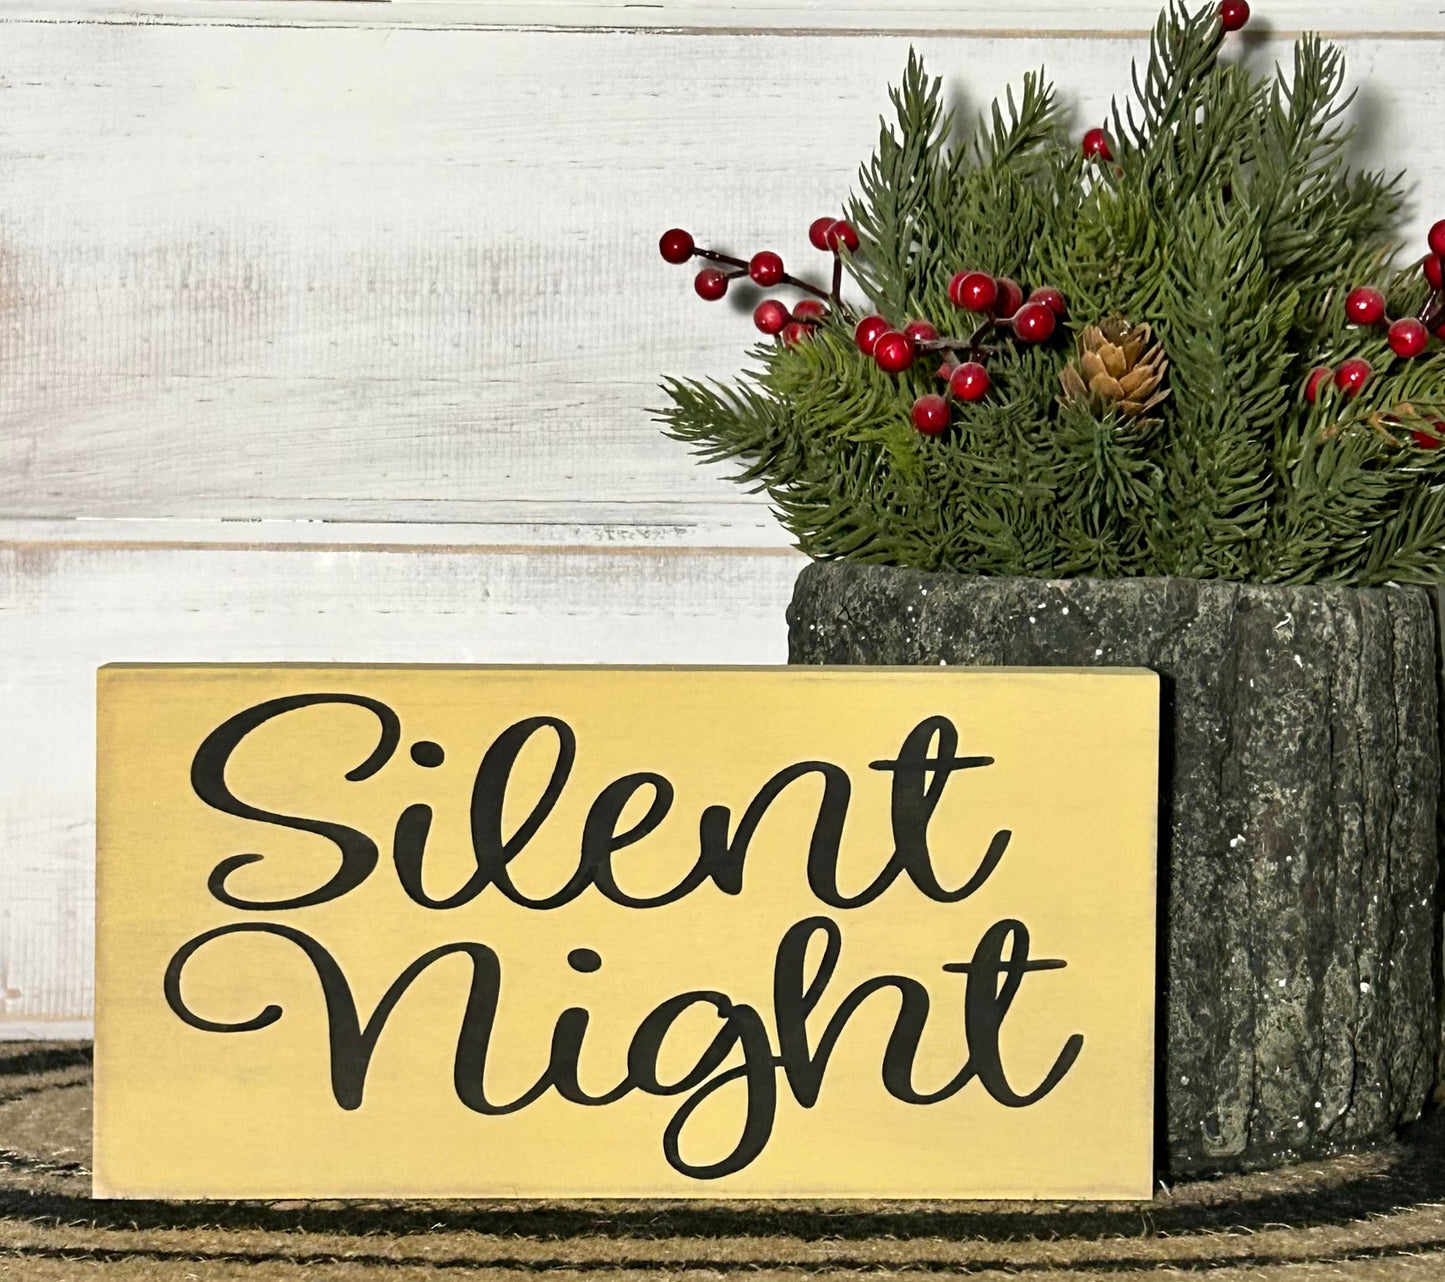 "silent night" wood sign